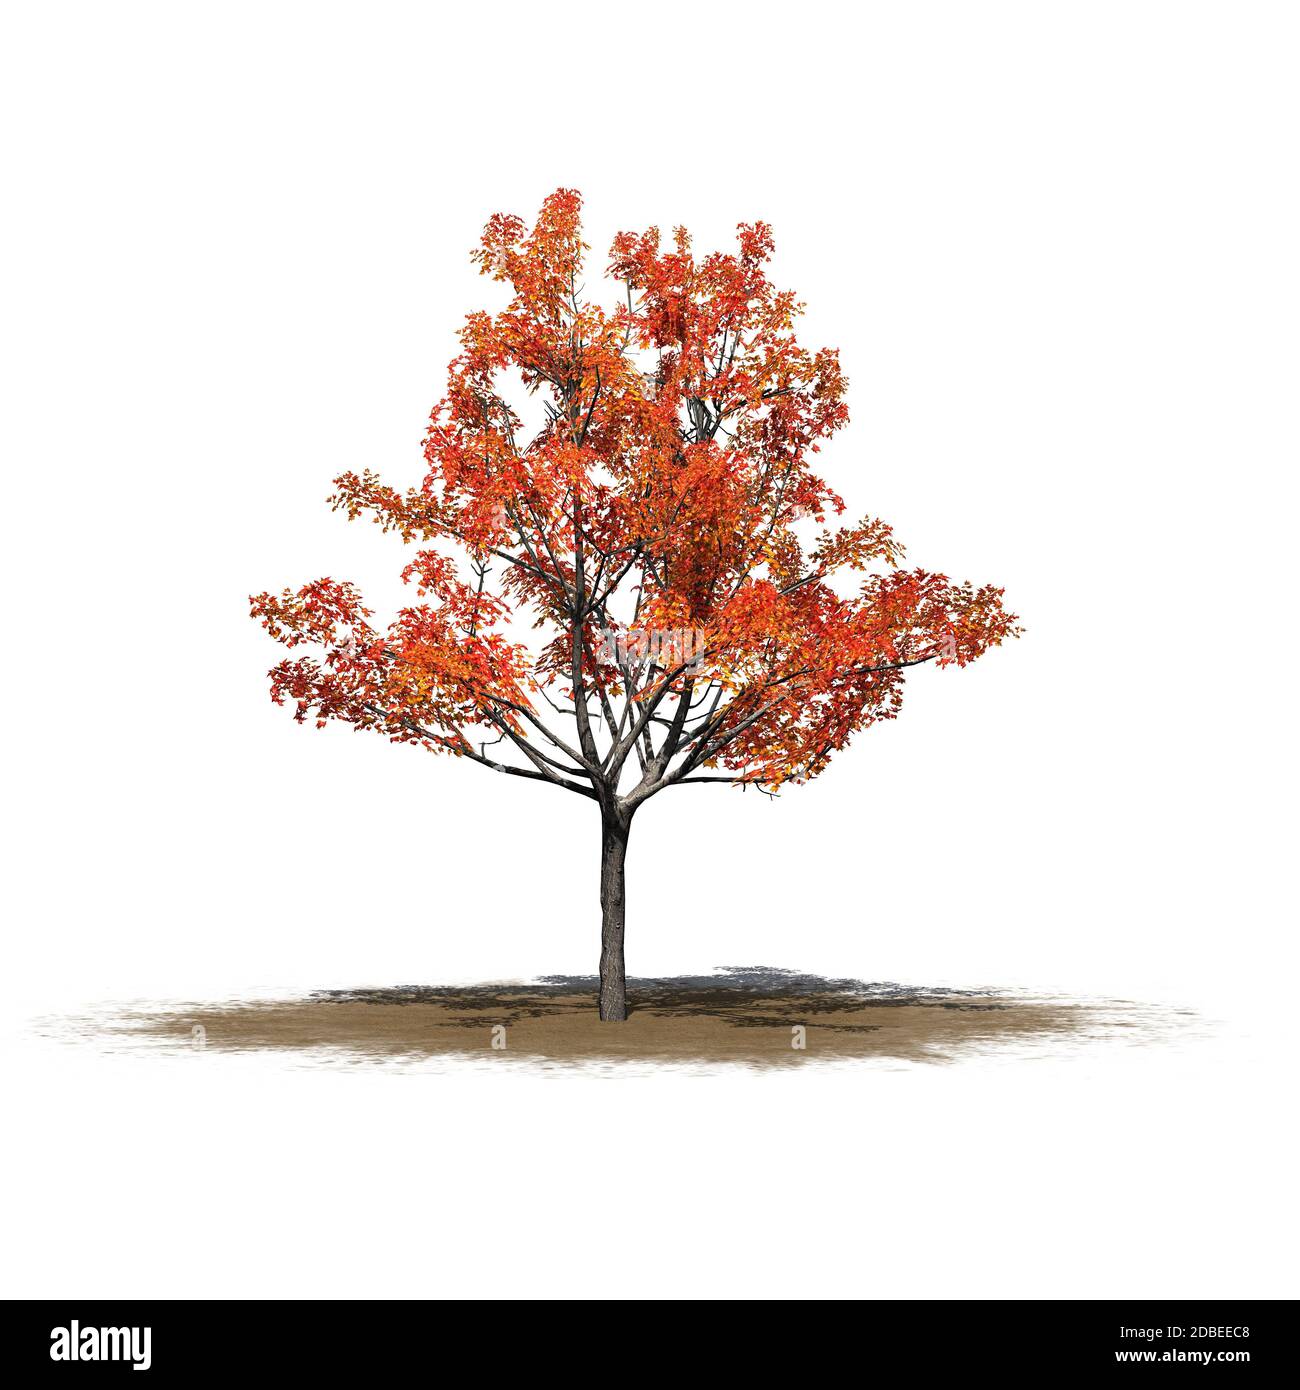 a single Japanese Maple tree in autumn on a sand area Stock Photo